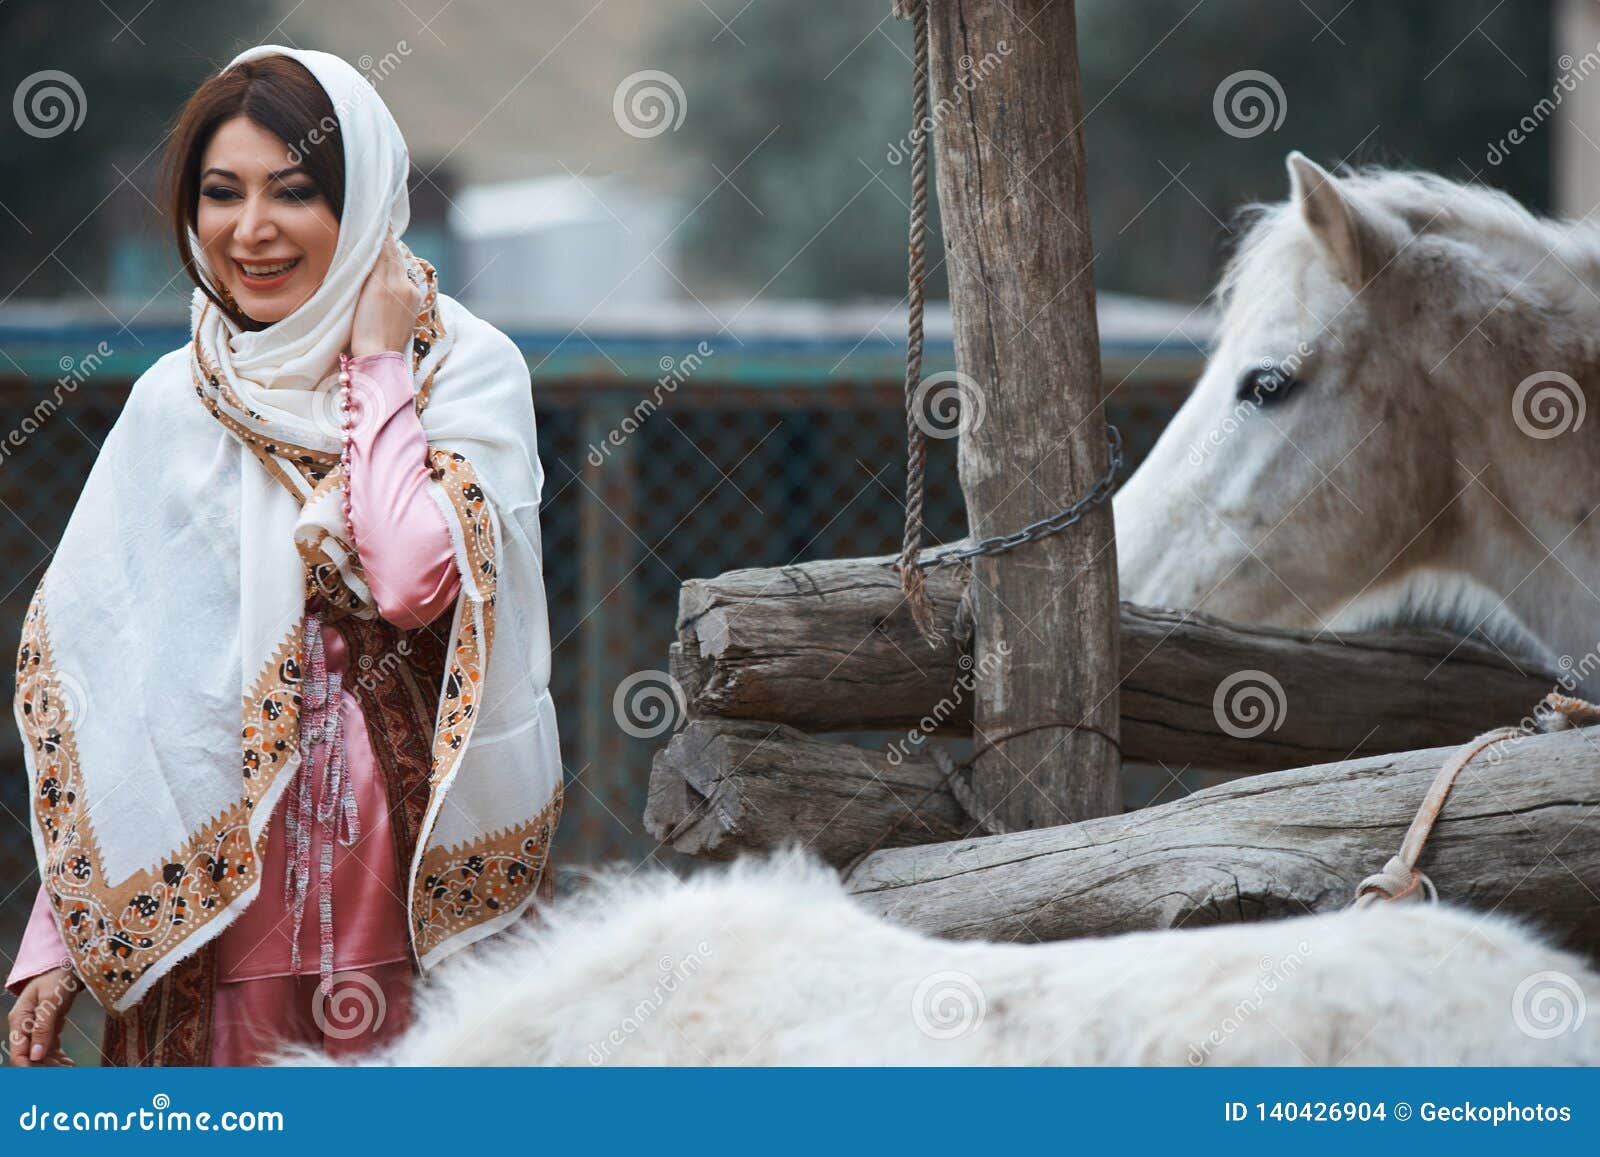 beautiful azeri woman in traditional azerbaijani dress standing with white horse